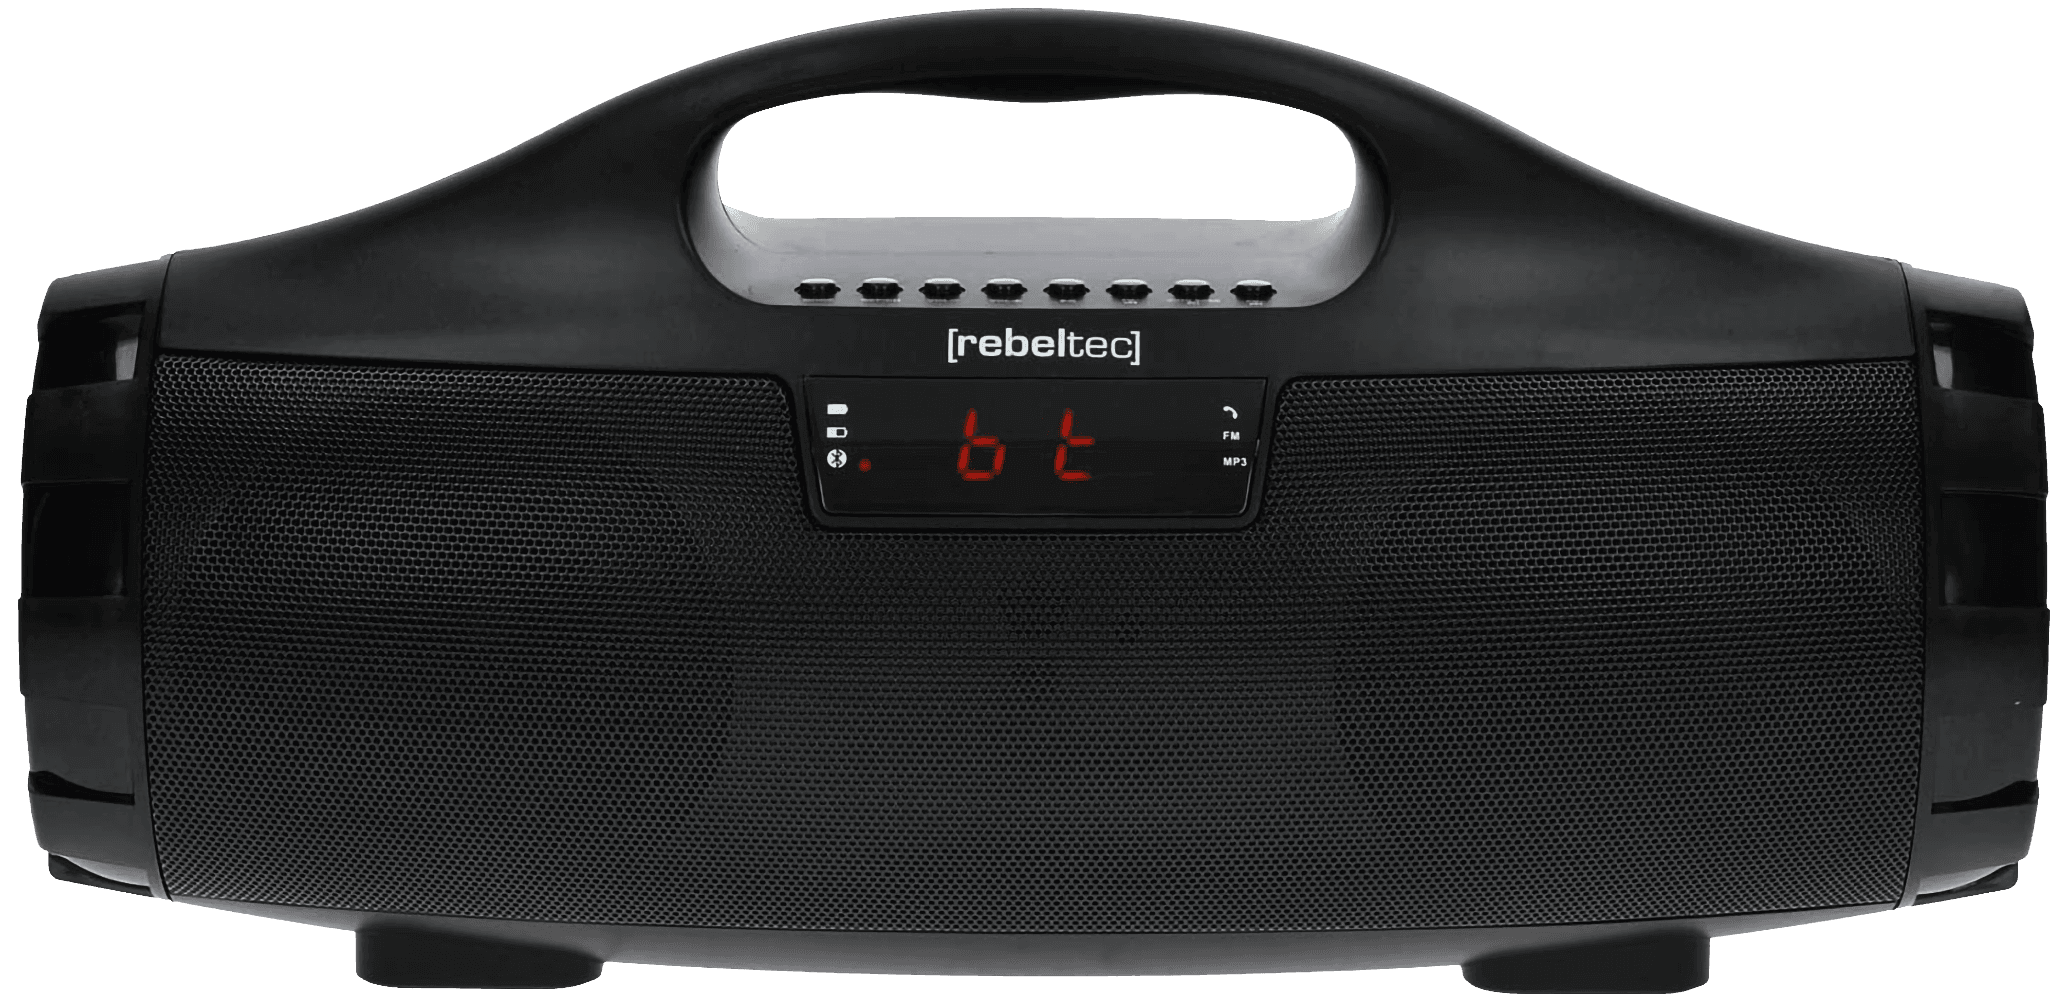 Oppo A94 5G kompatibilis bluetooth hangszóró Rebeltec Soundbox 390 fekete